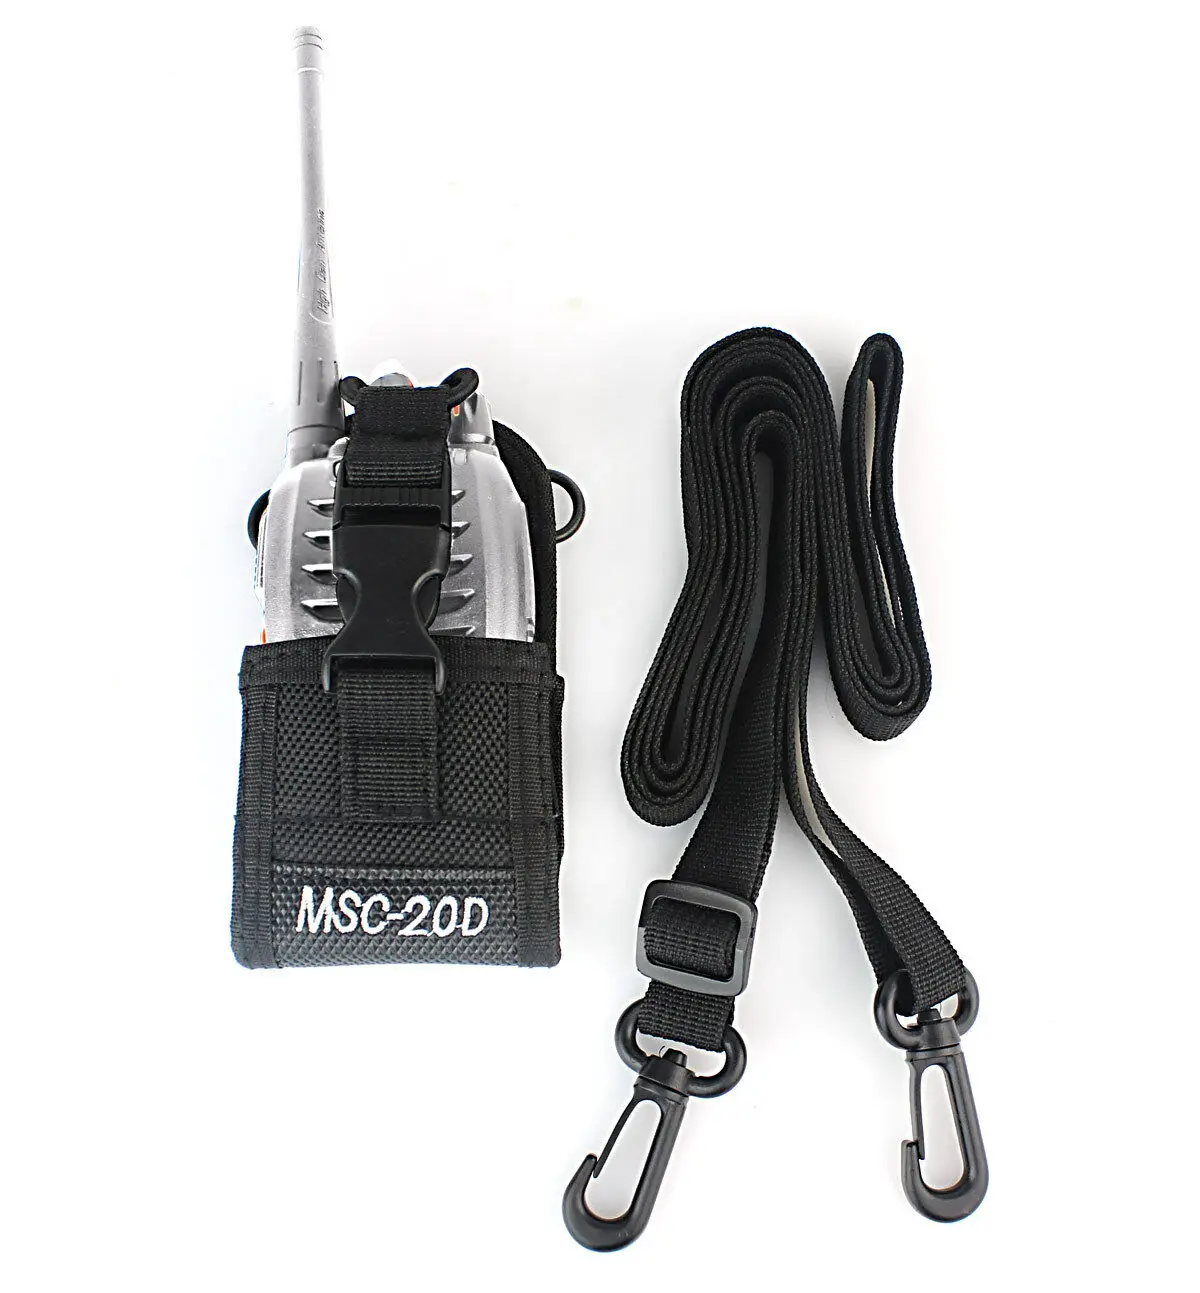 

MSC-20D nylon Multi-function Radio shell Case Holder Shell for Baofeng H777 BF-666S/888S Kenwood Motorola Yaesu Icom, Black